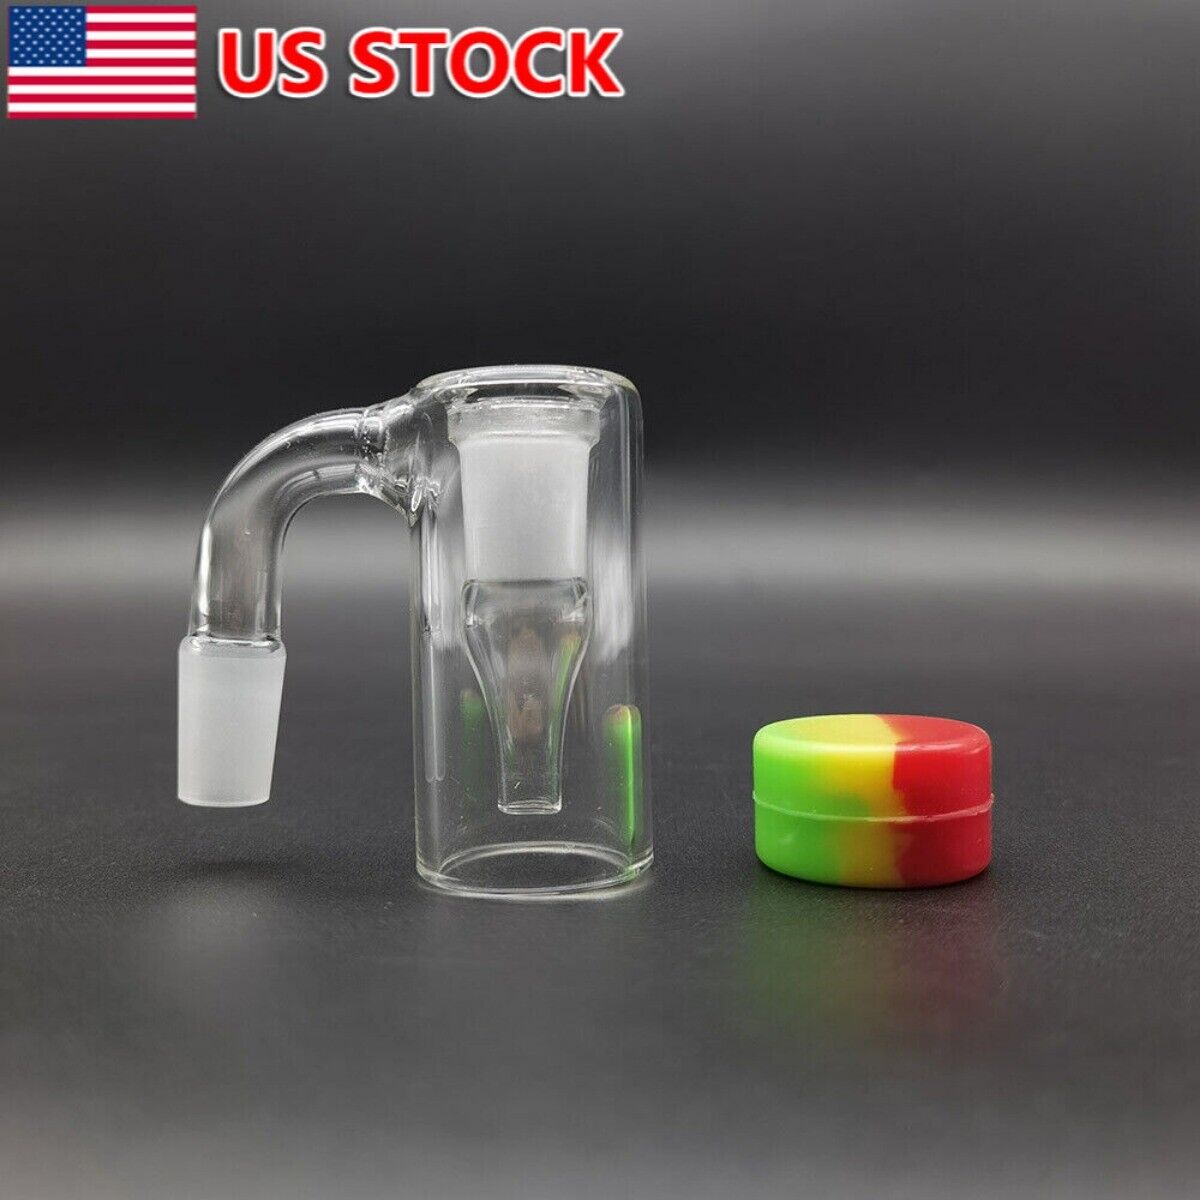 1x 90° Glass Ash Catcher Glass Hookah Attachment for Water Pipe Smoking Bong USA